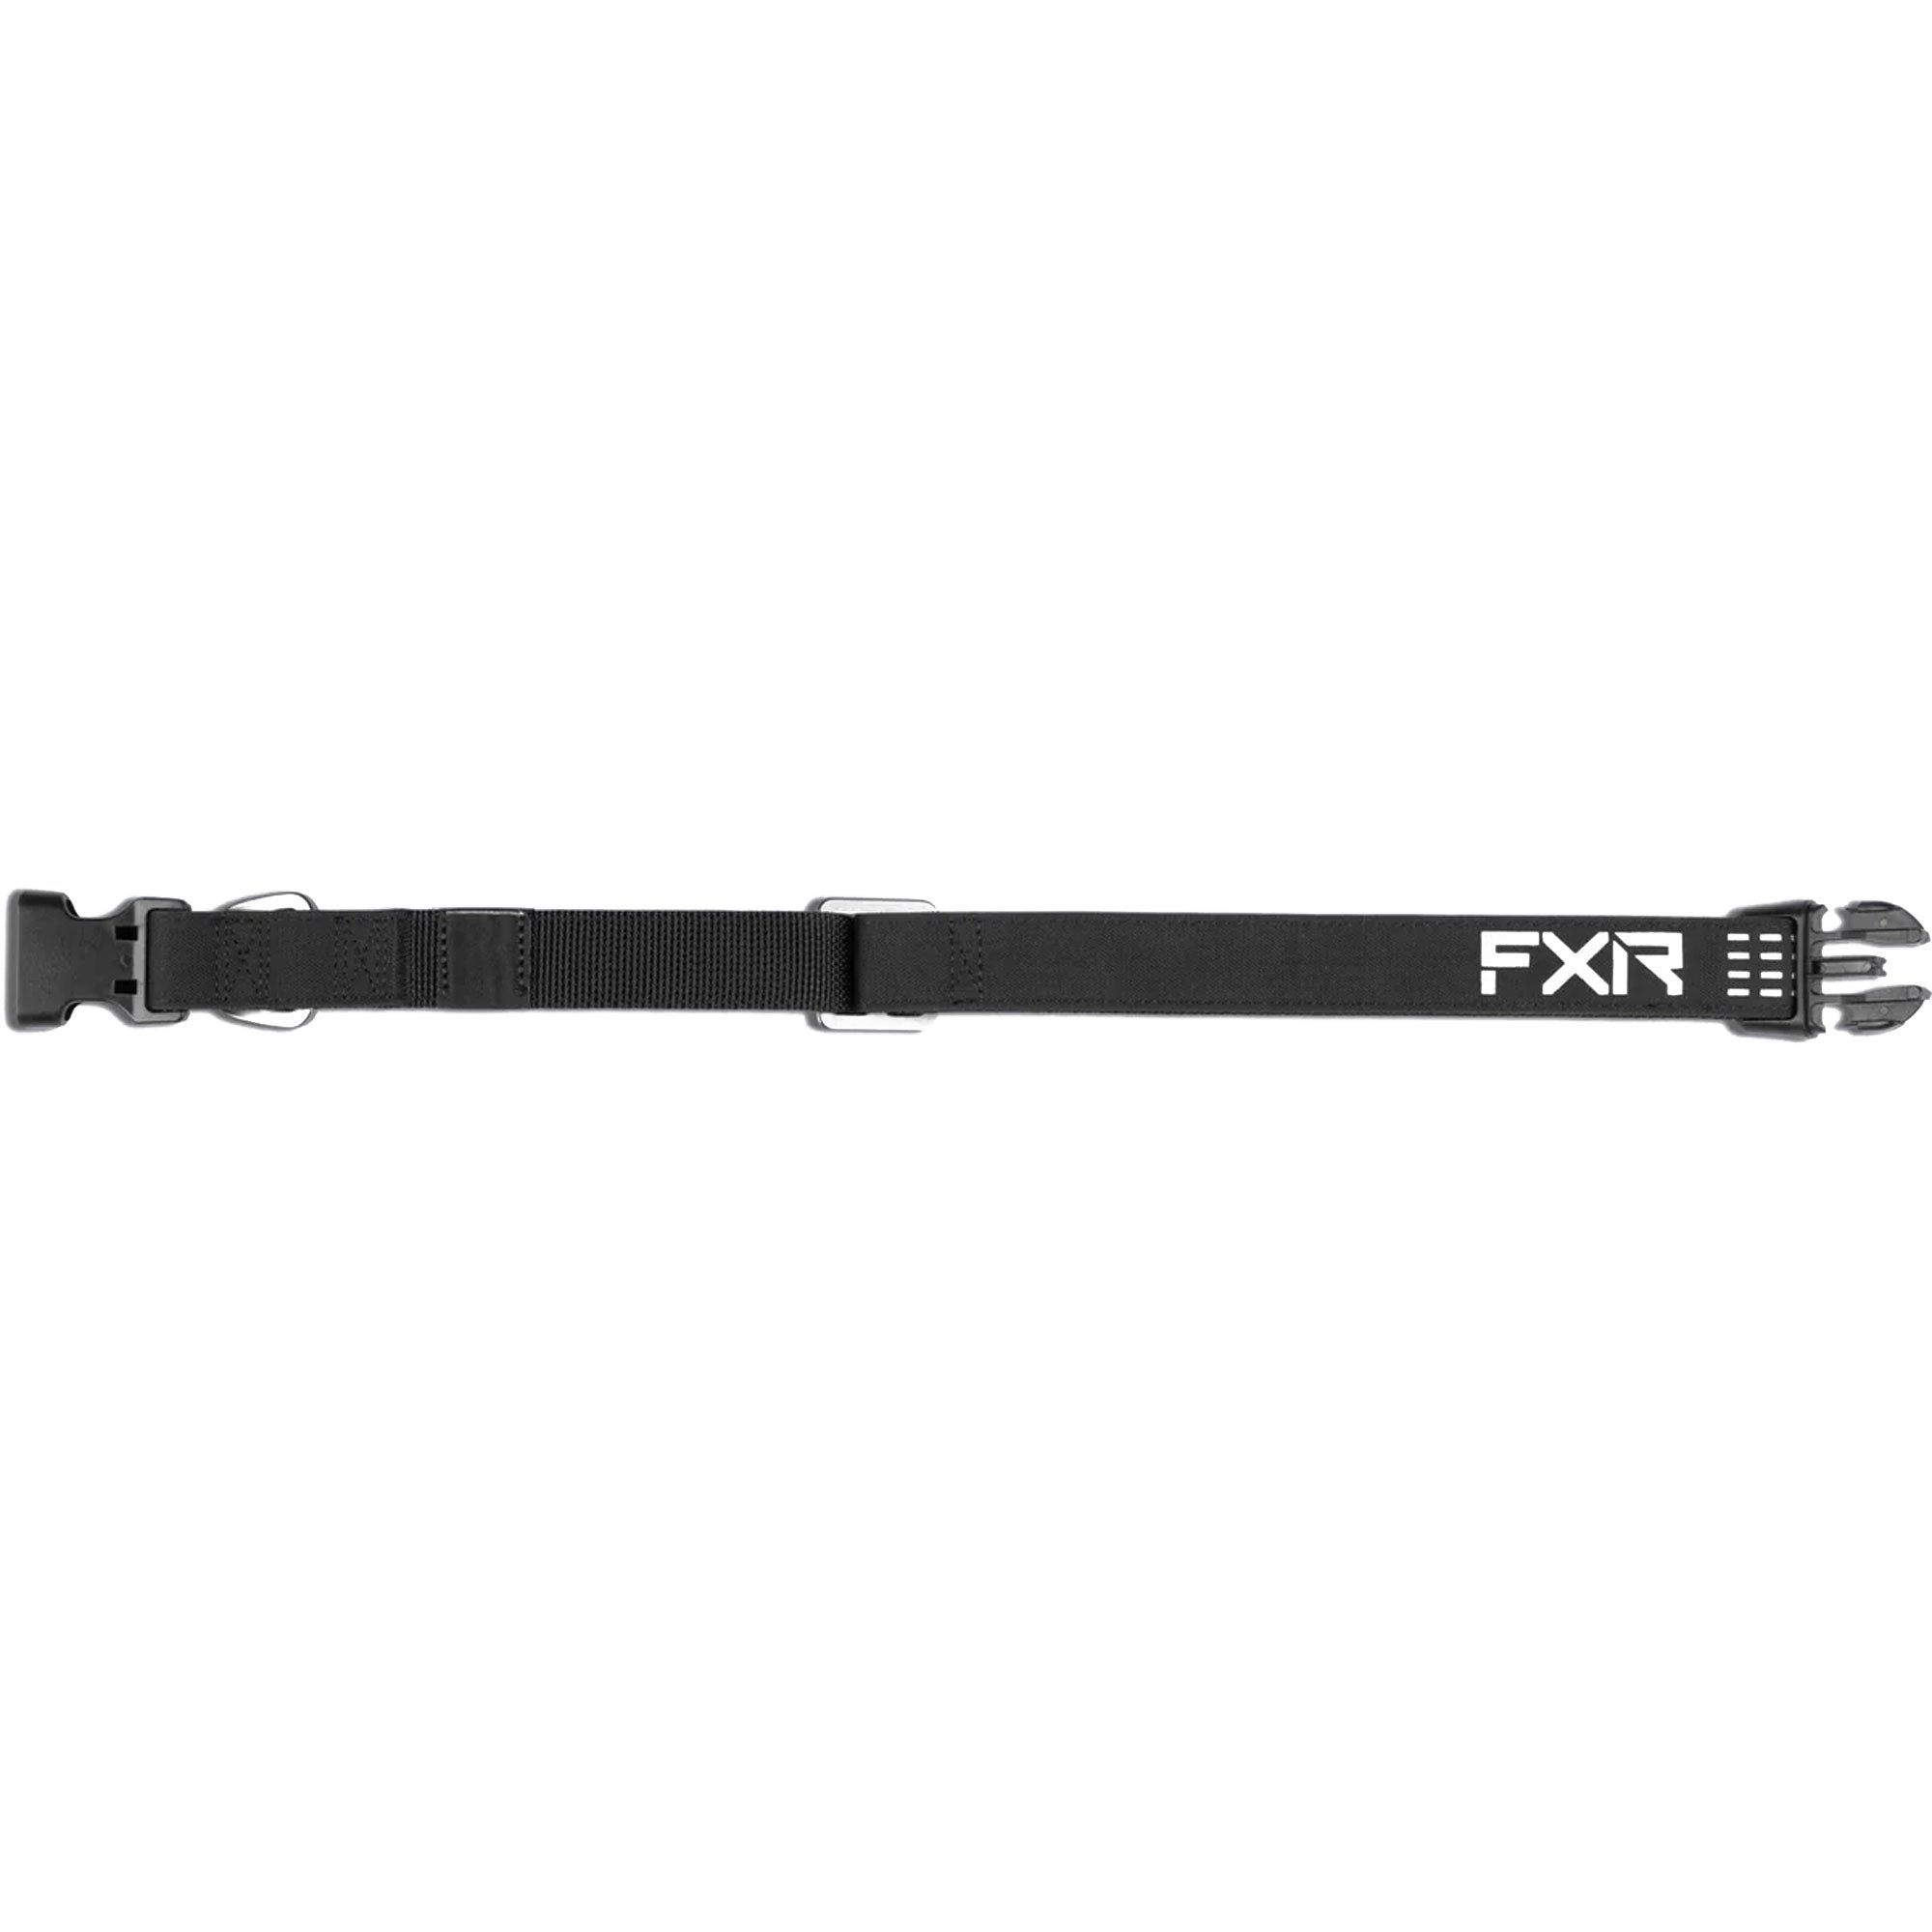 FXR  Dog Collar Heavy Duty Release Buckle Reflective Adjustable Black Grey